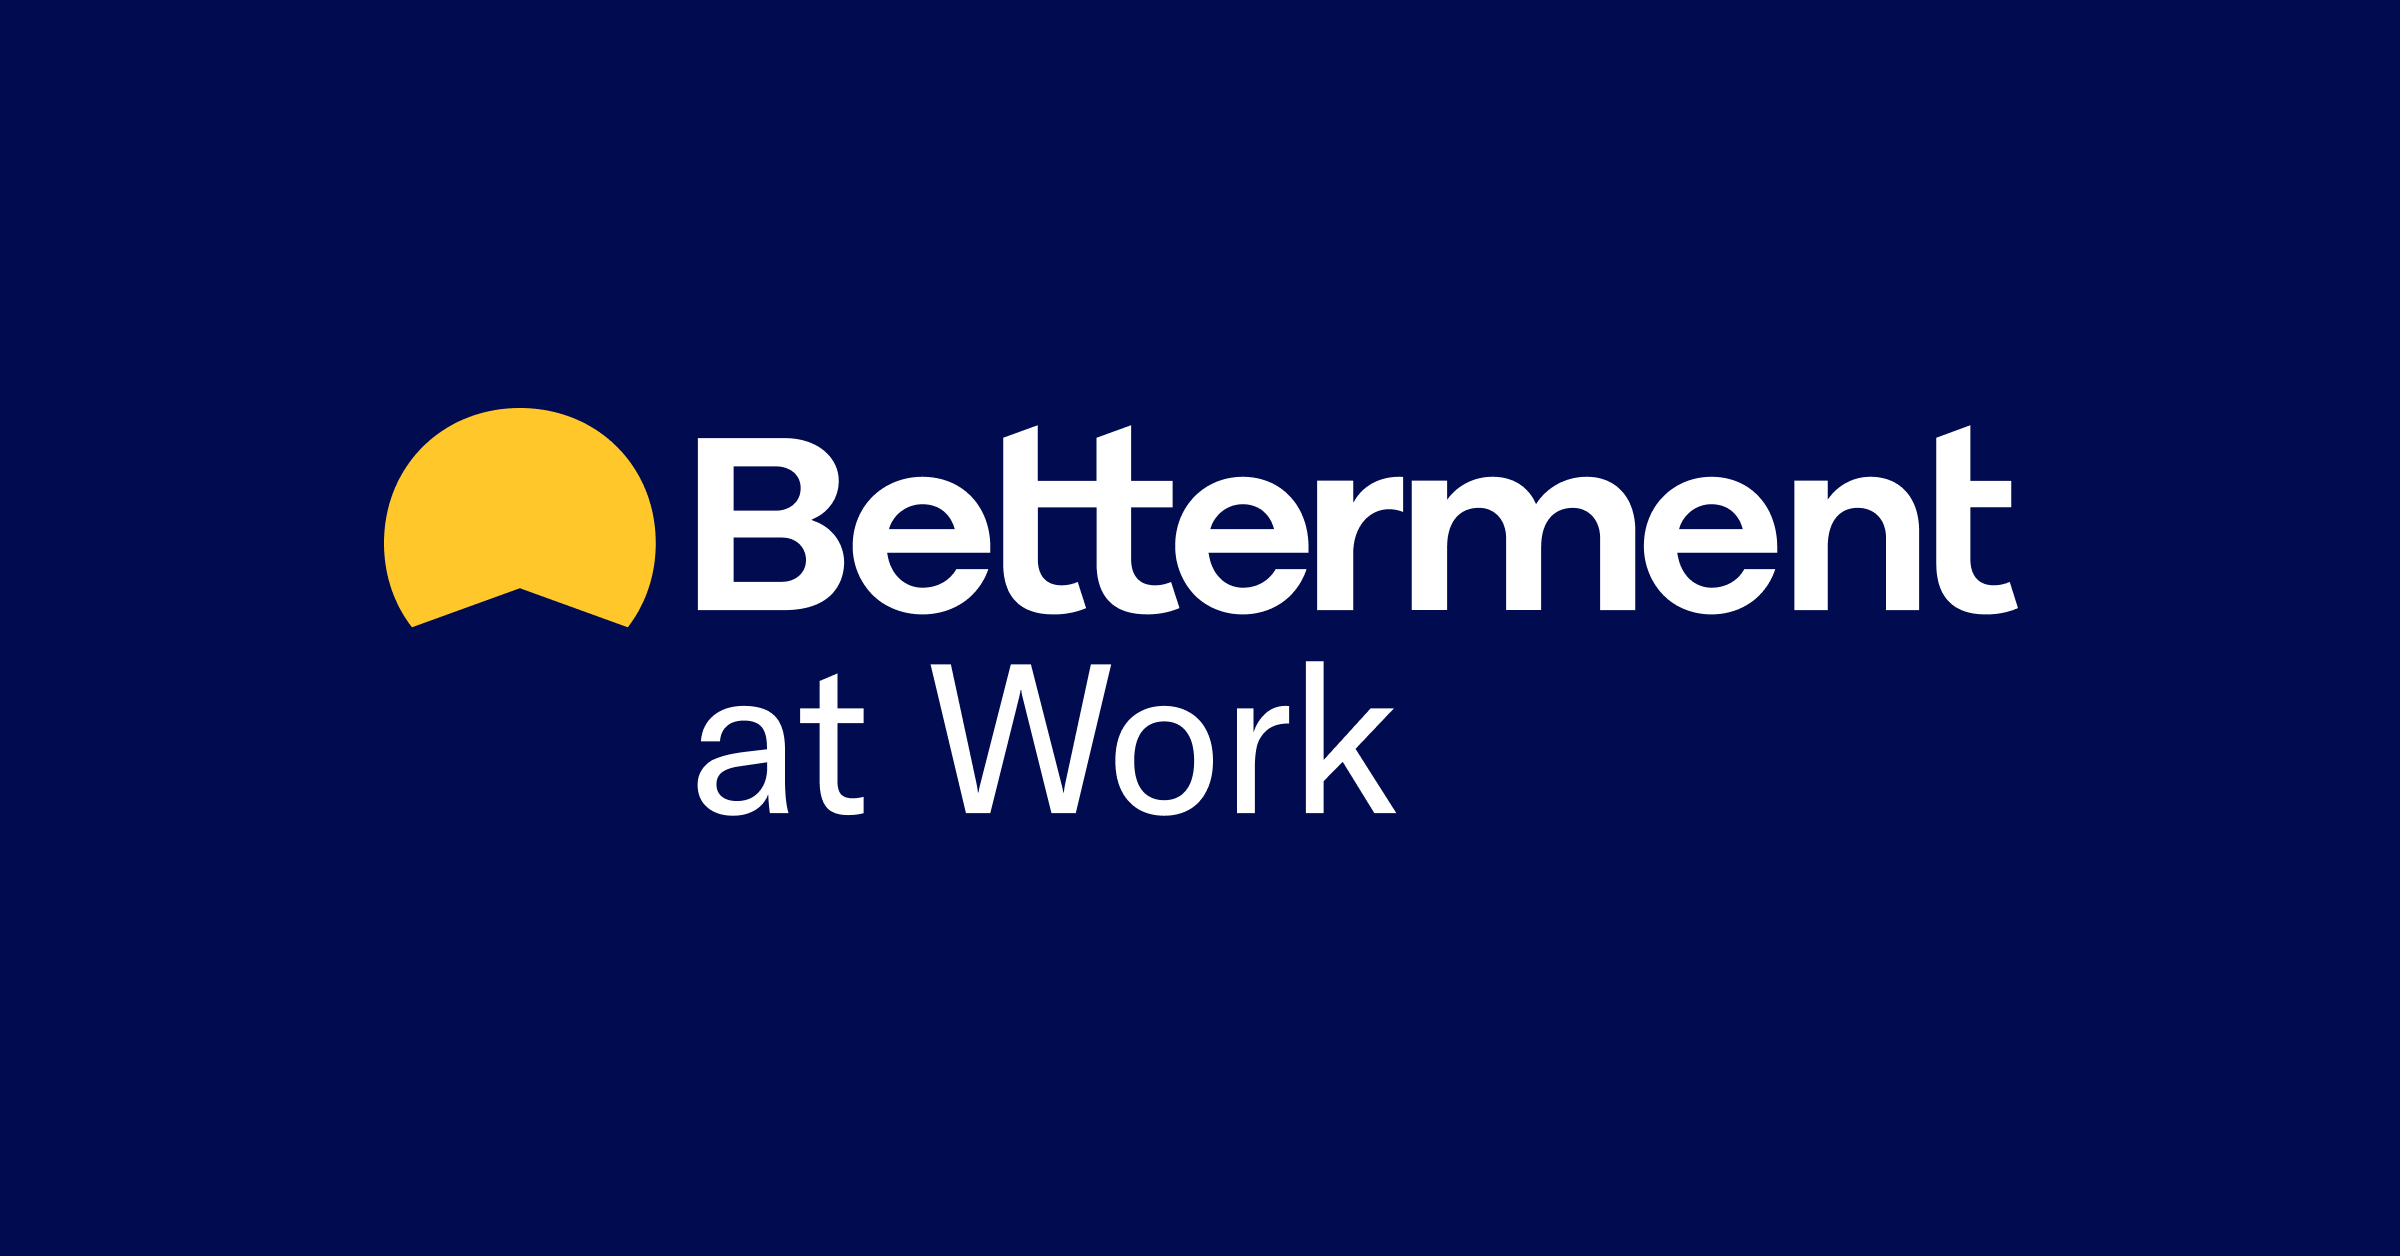 Betterment at Work logo